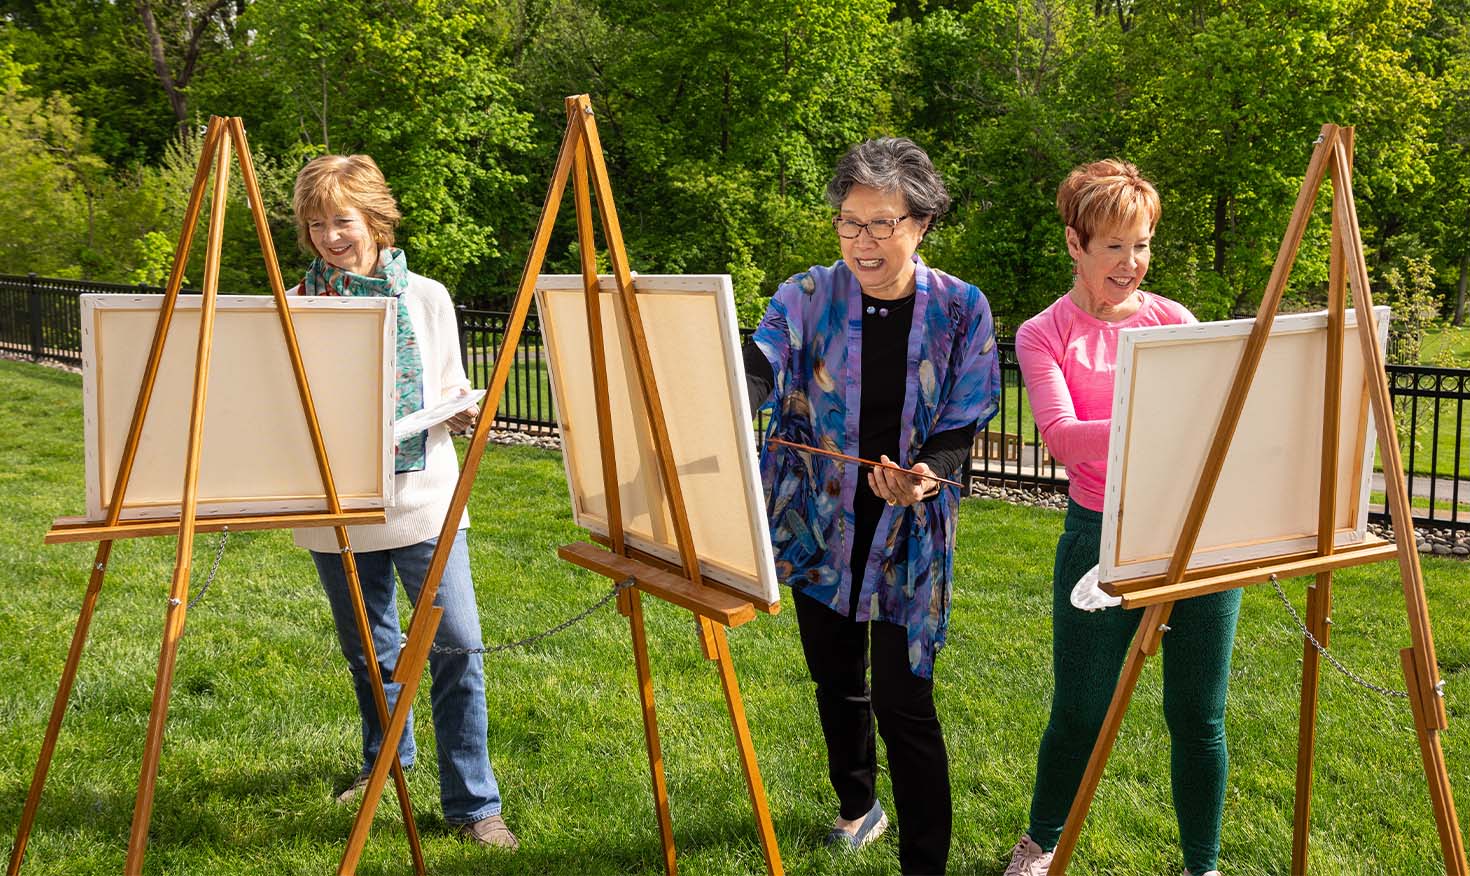 Three senior woman painting outside